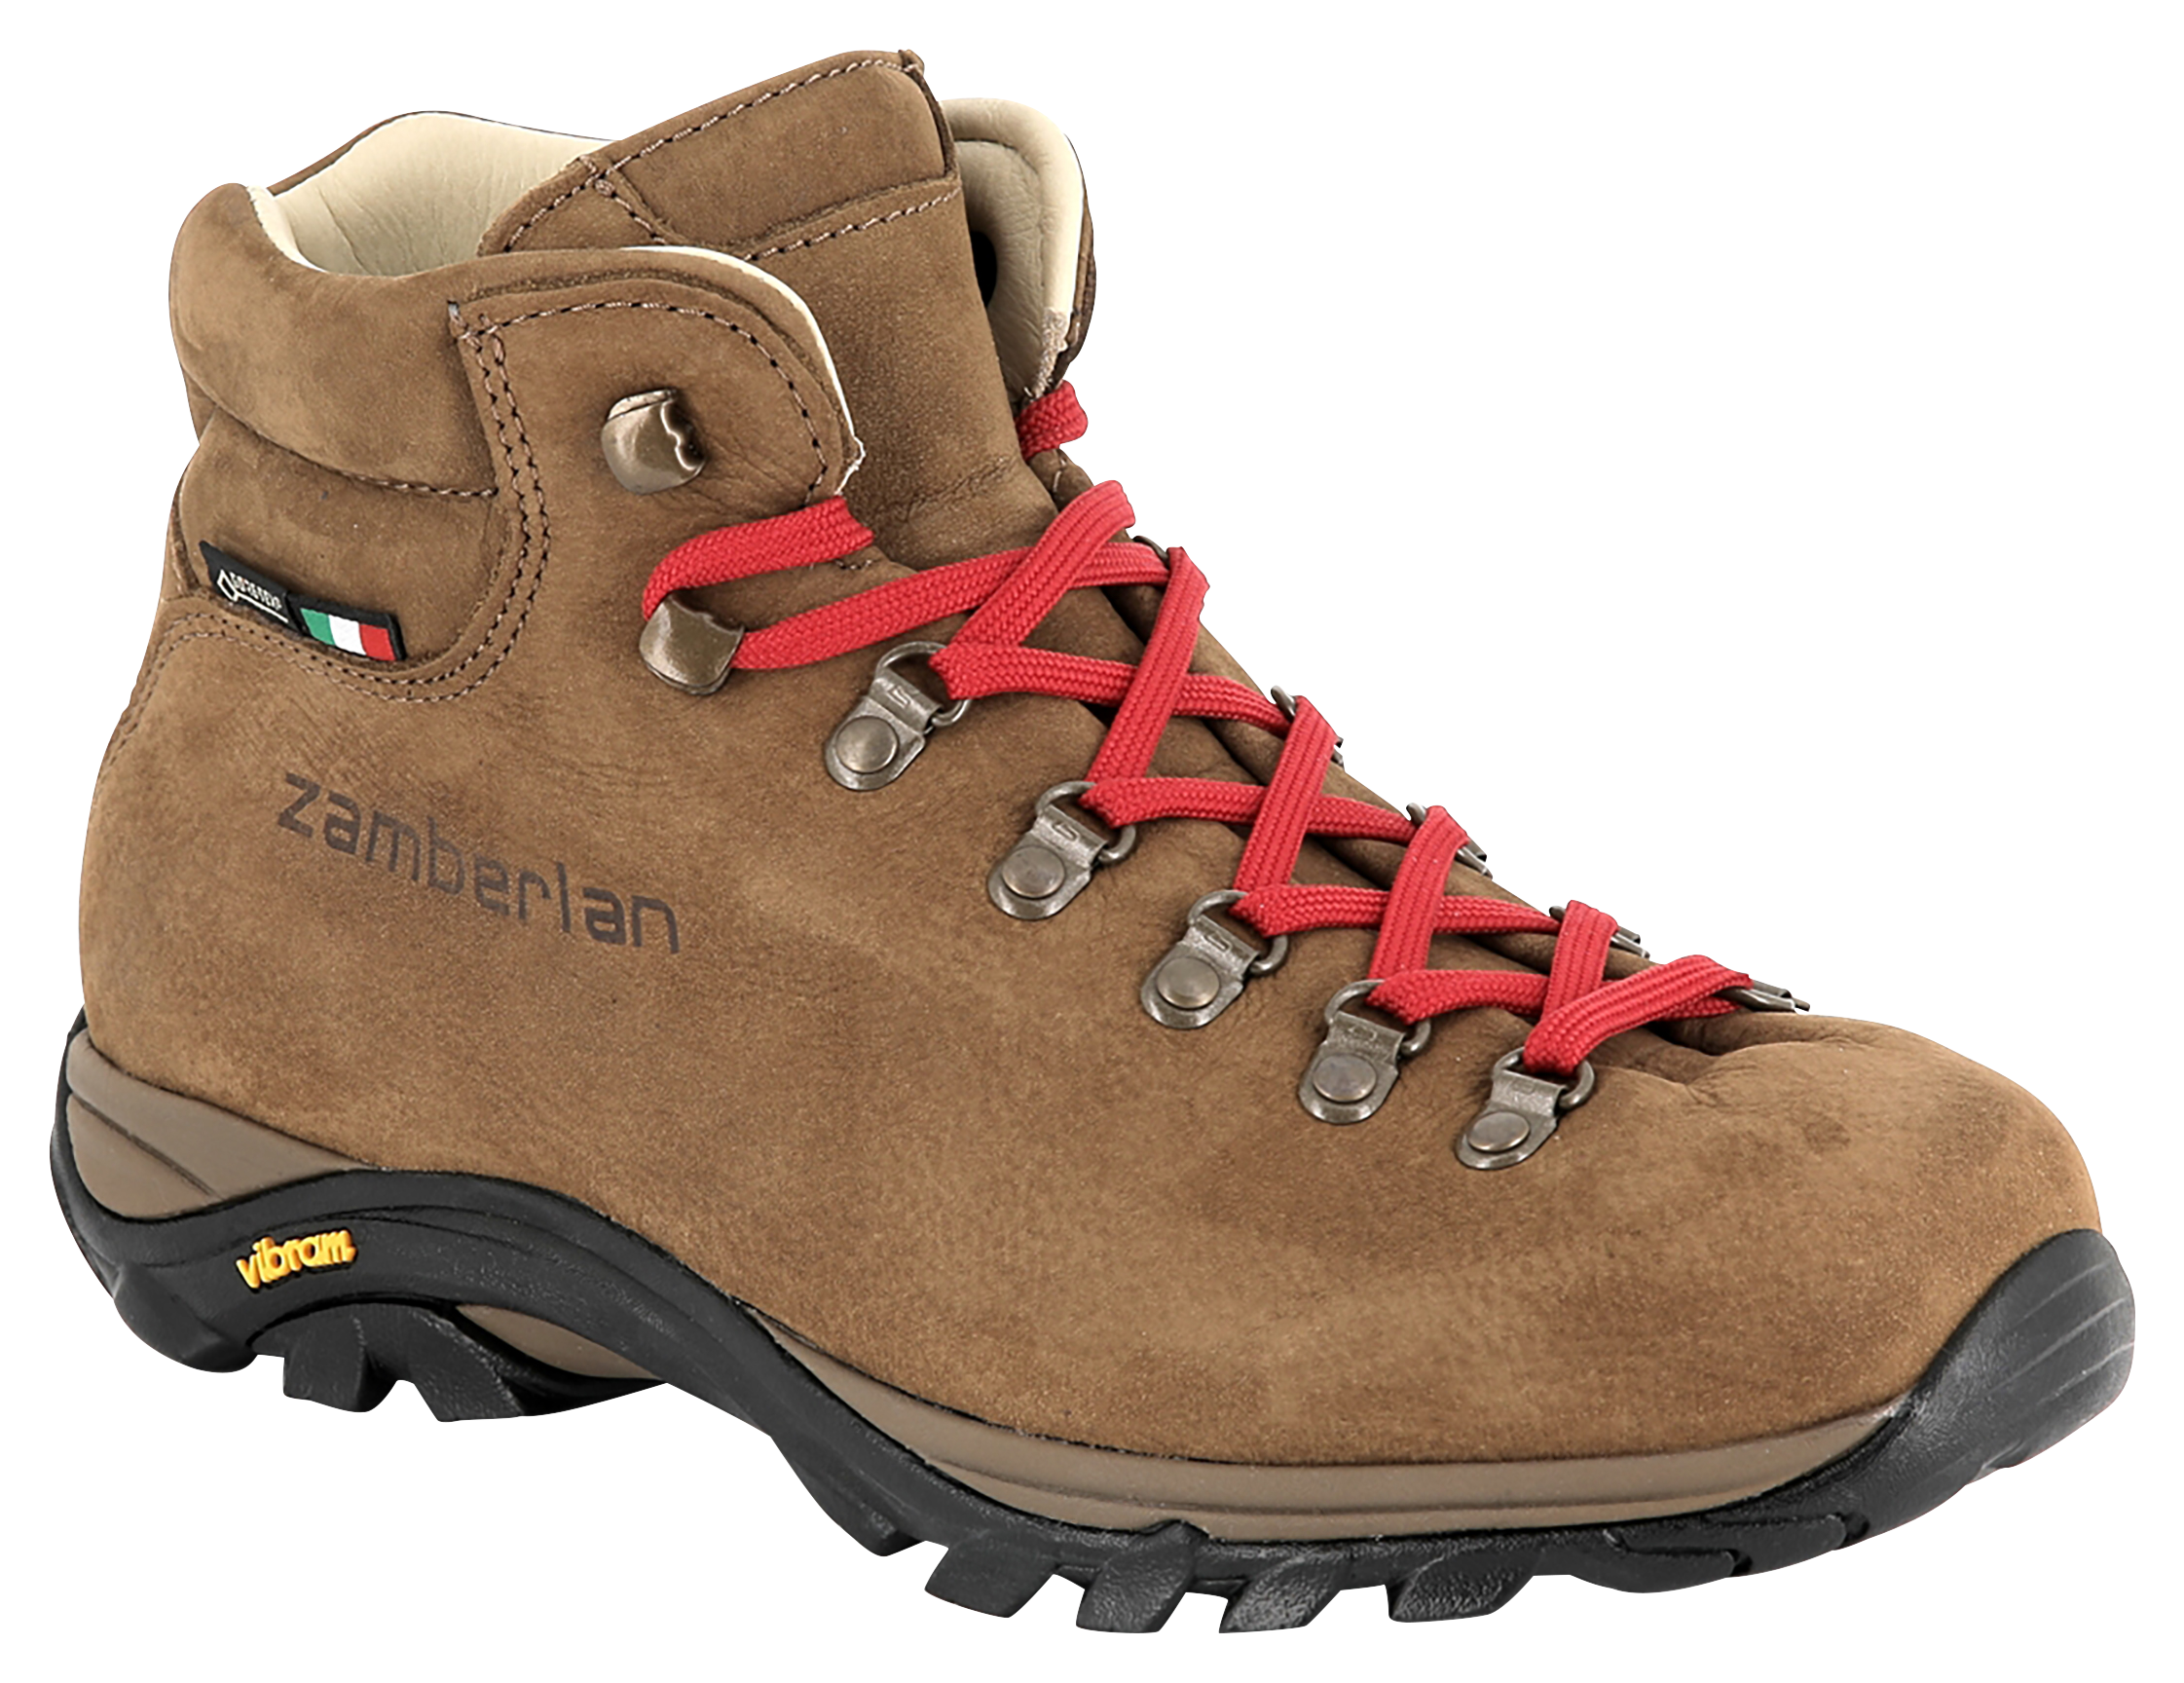 Zamberlan 320 Trail Lite EVO GTX Waterproof Hiking Boots for Ladies